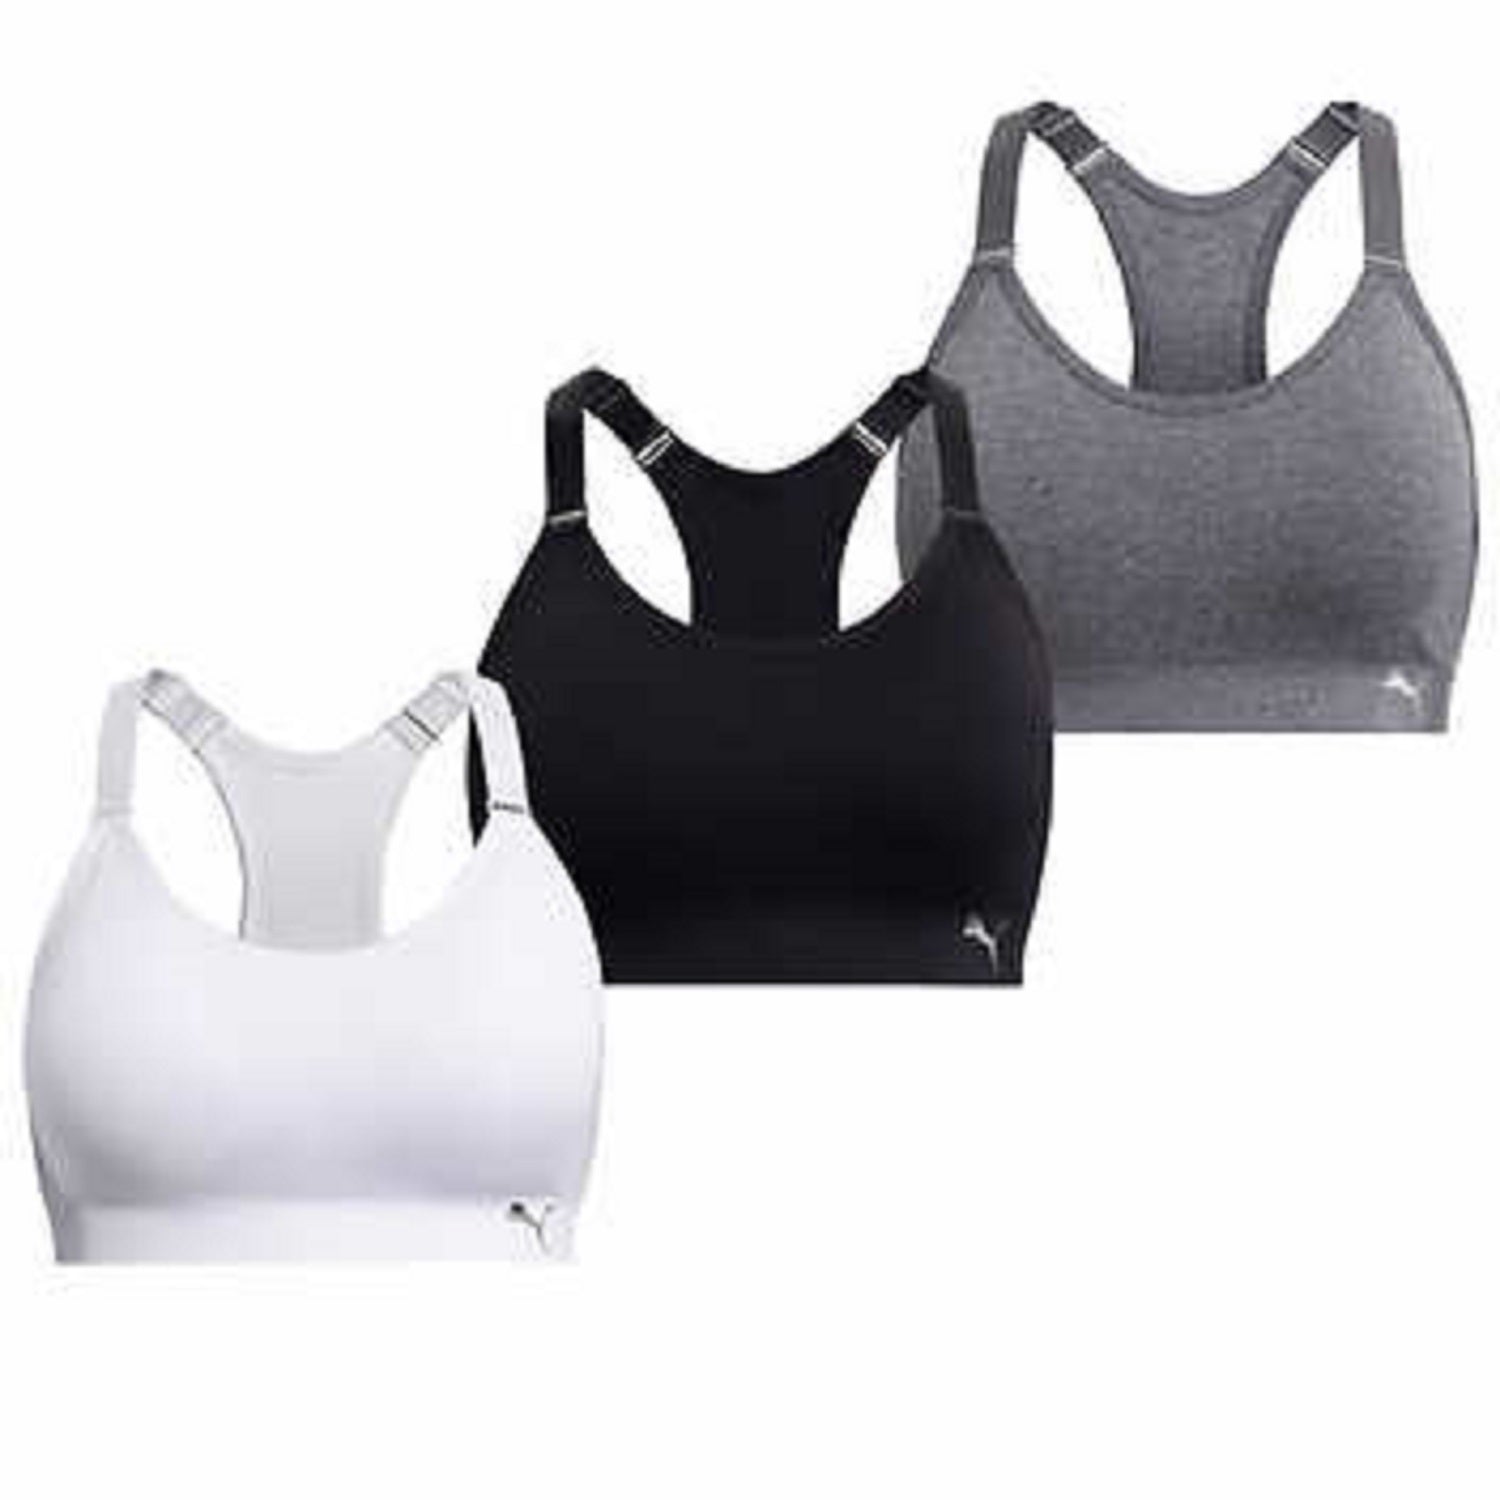 PUMA Sports Bra, Padded - Black, White, Grey - 3pack